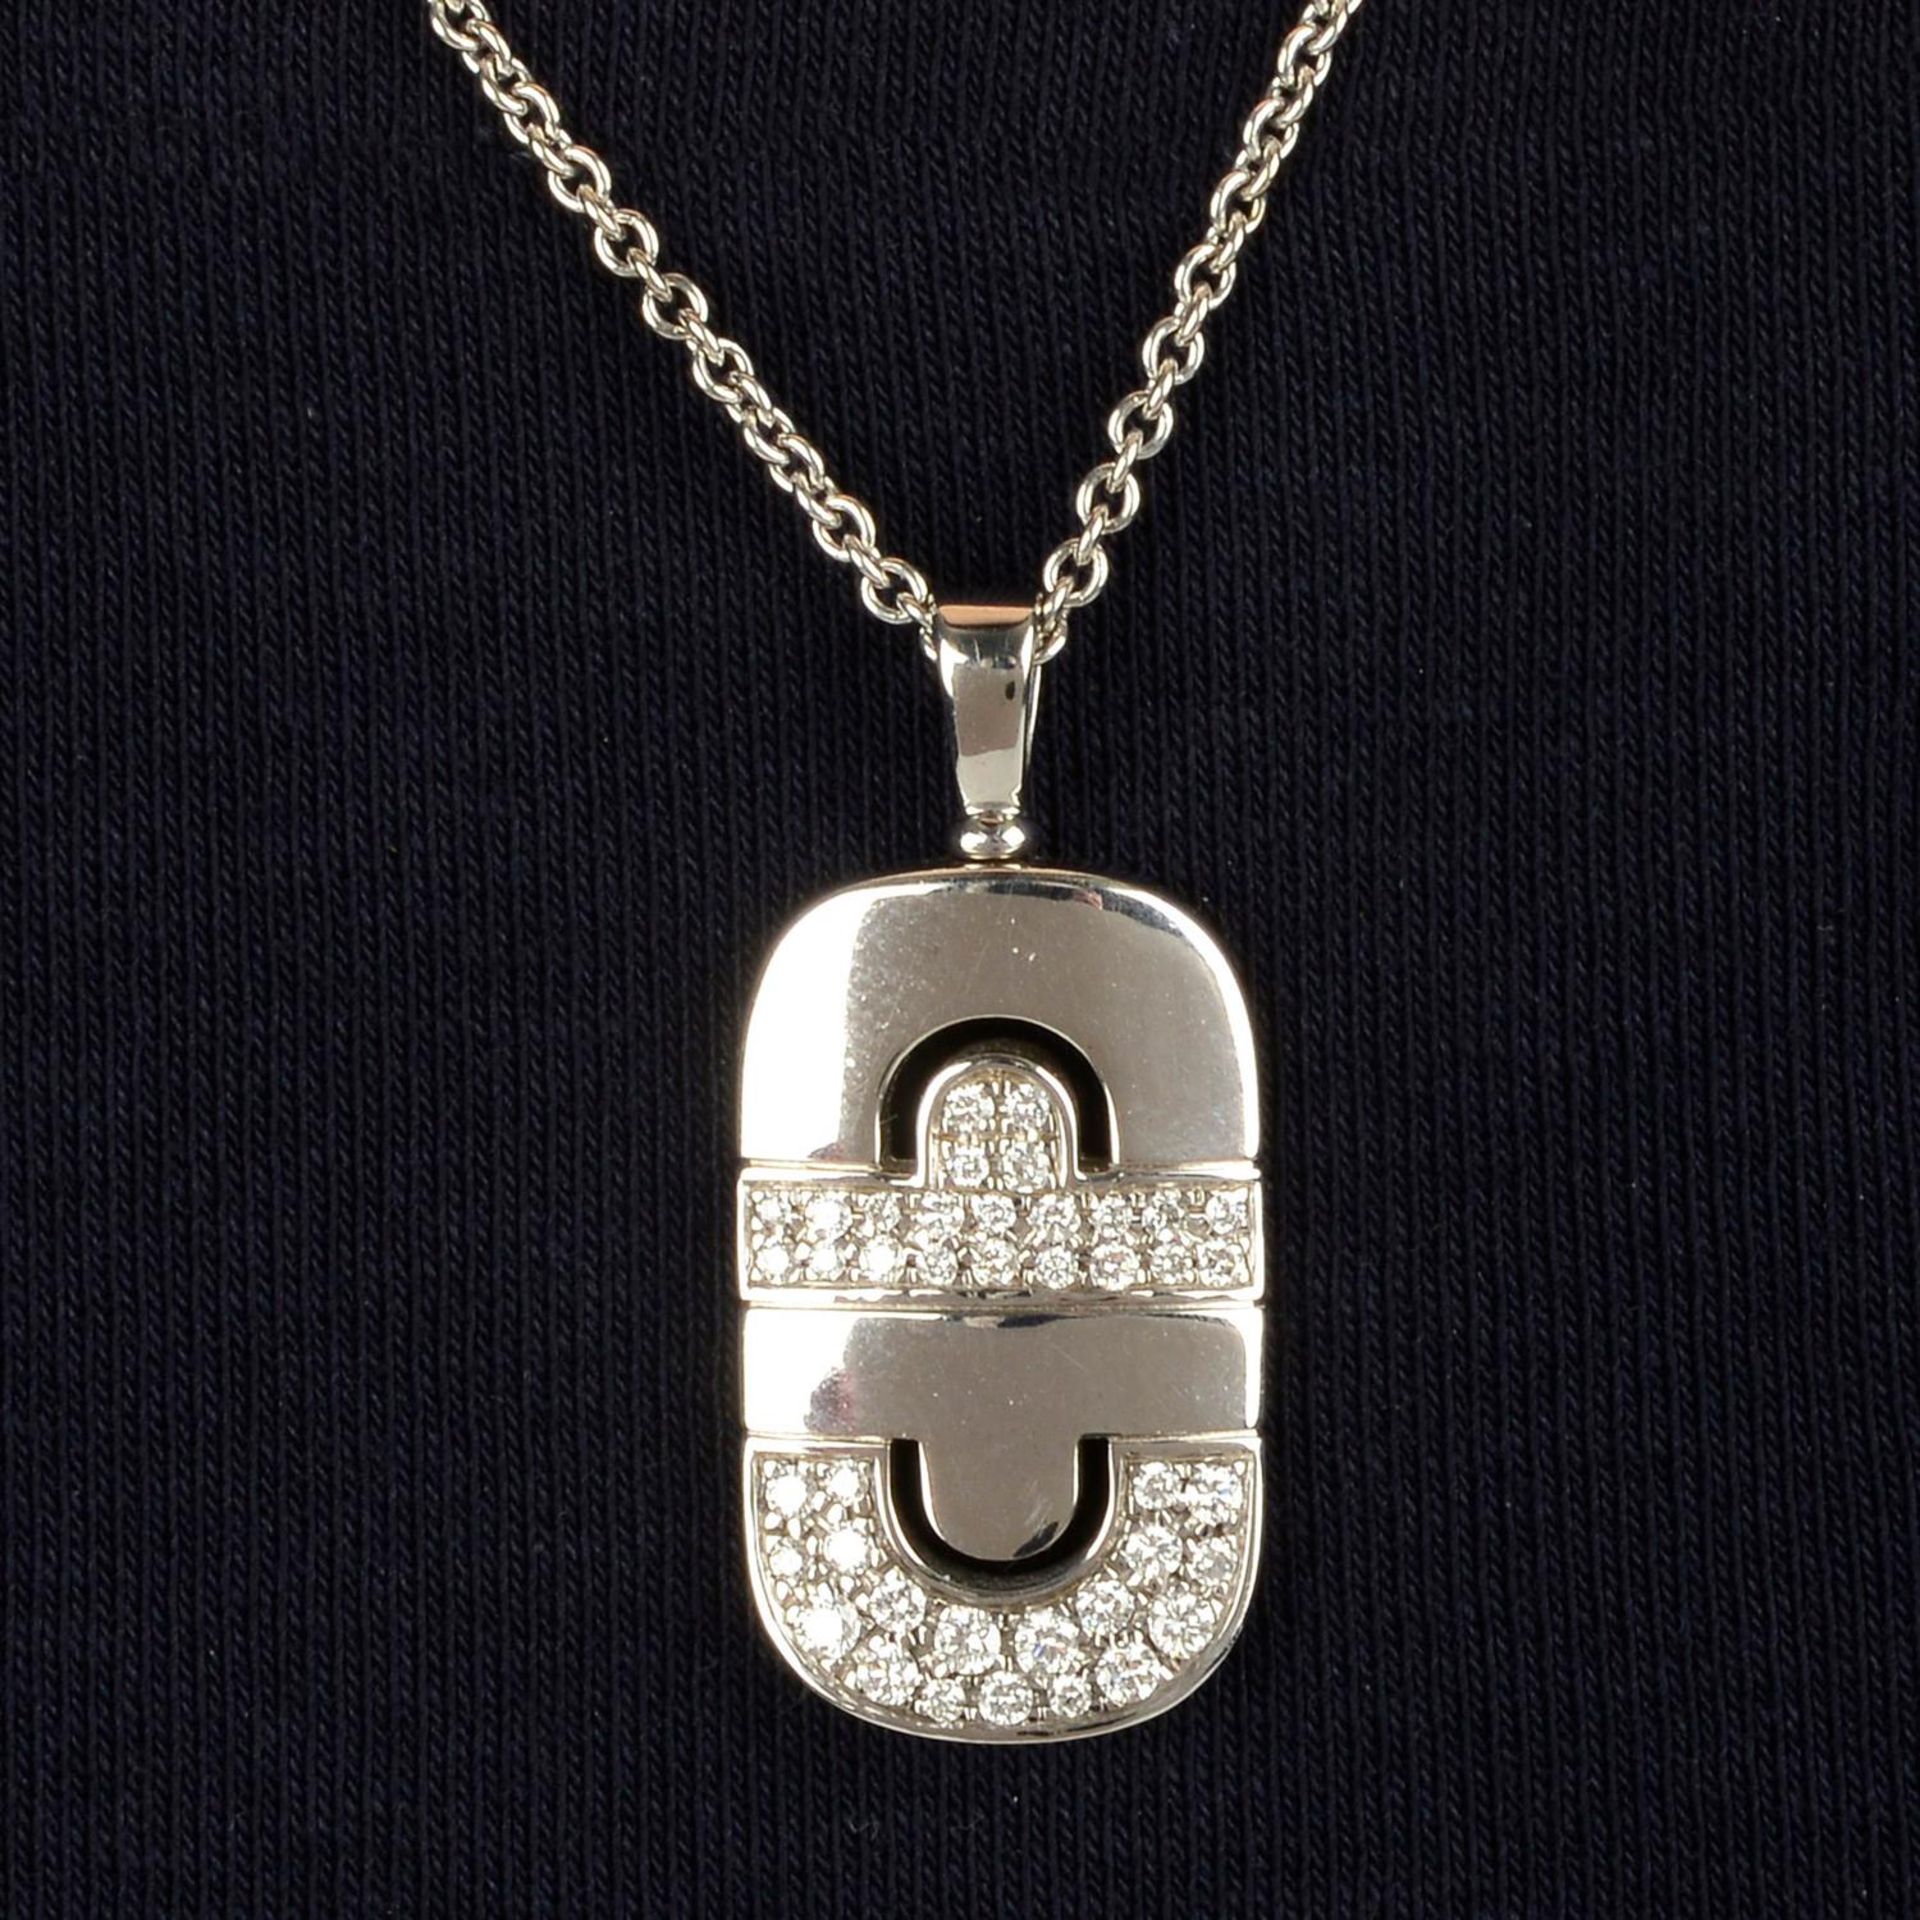 An 18ct gold pavé-set diamond 'Parentesi' pendant, with chain, by Bulgari.